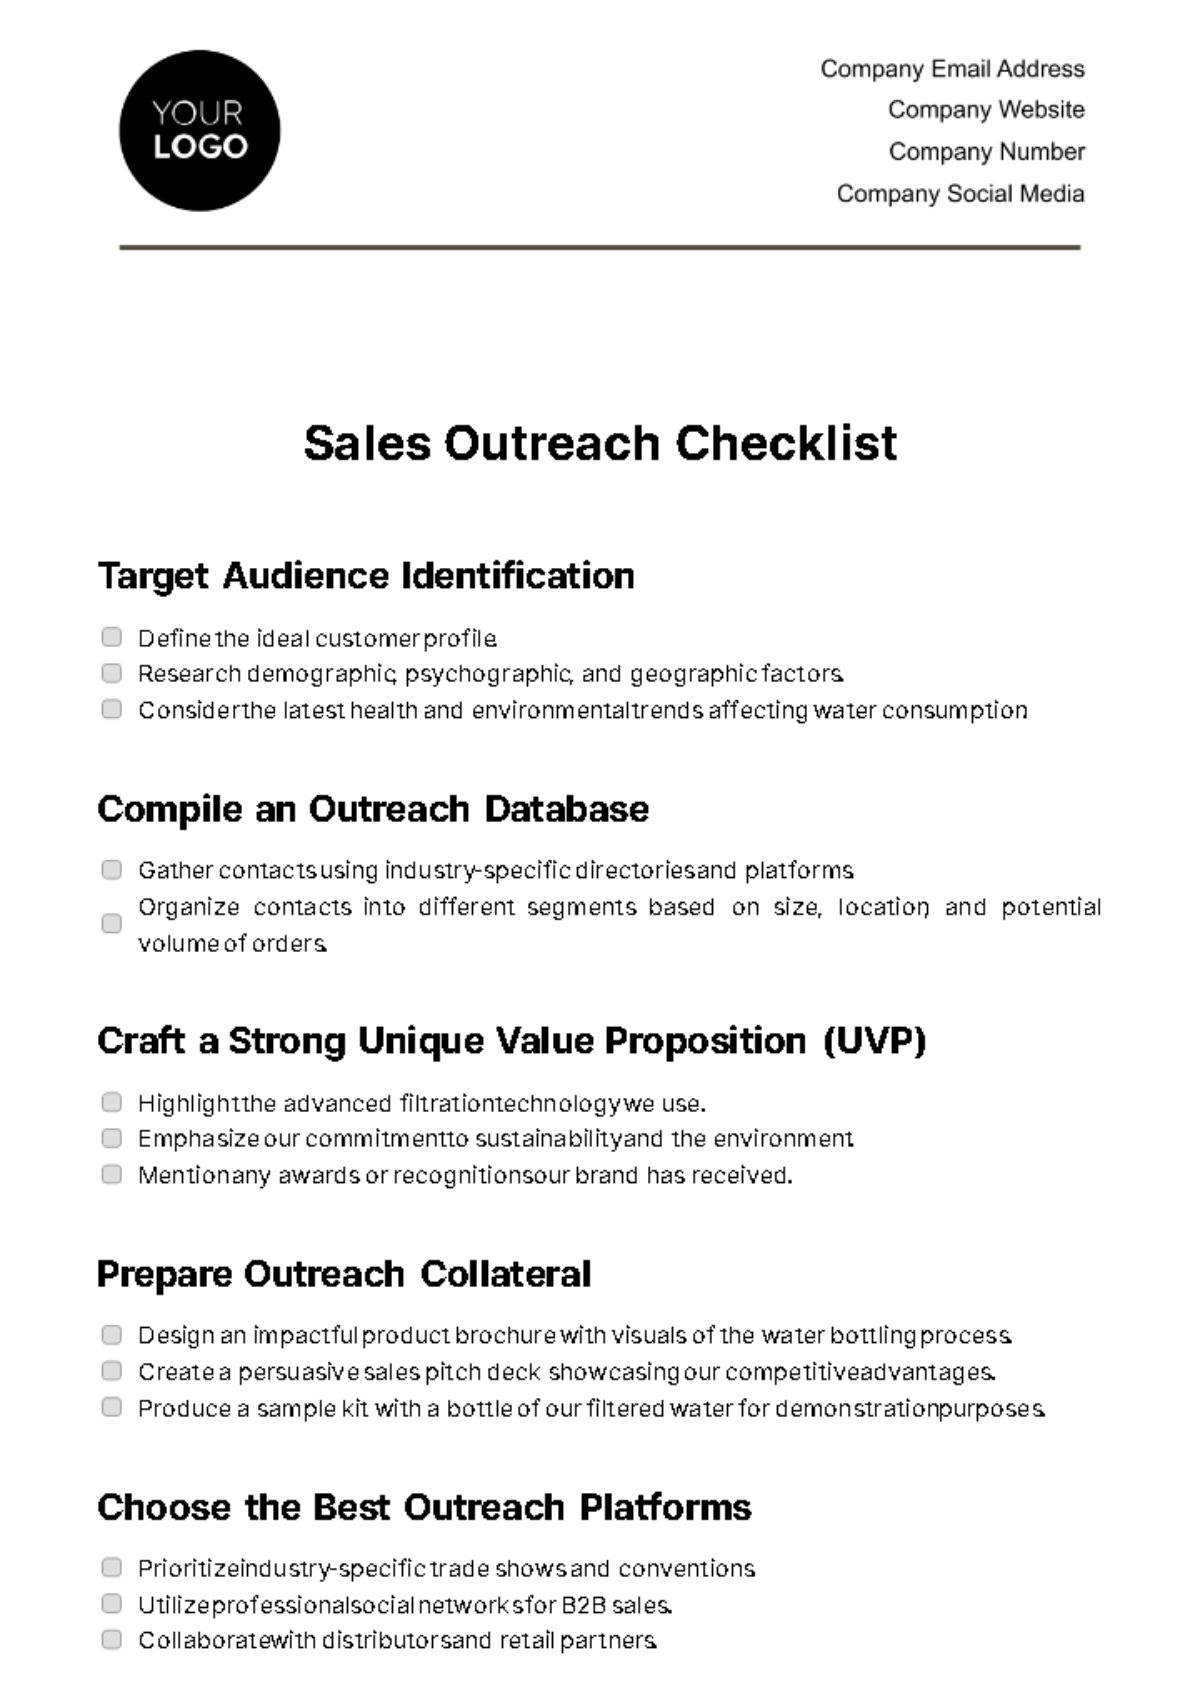 Free Sales Outreach Checklist Template